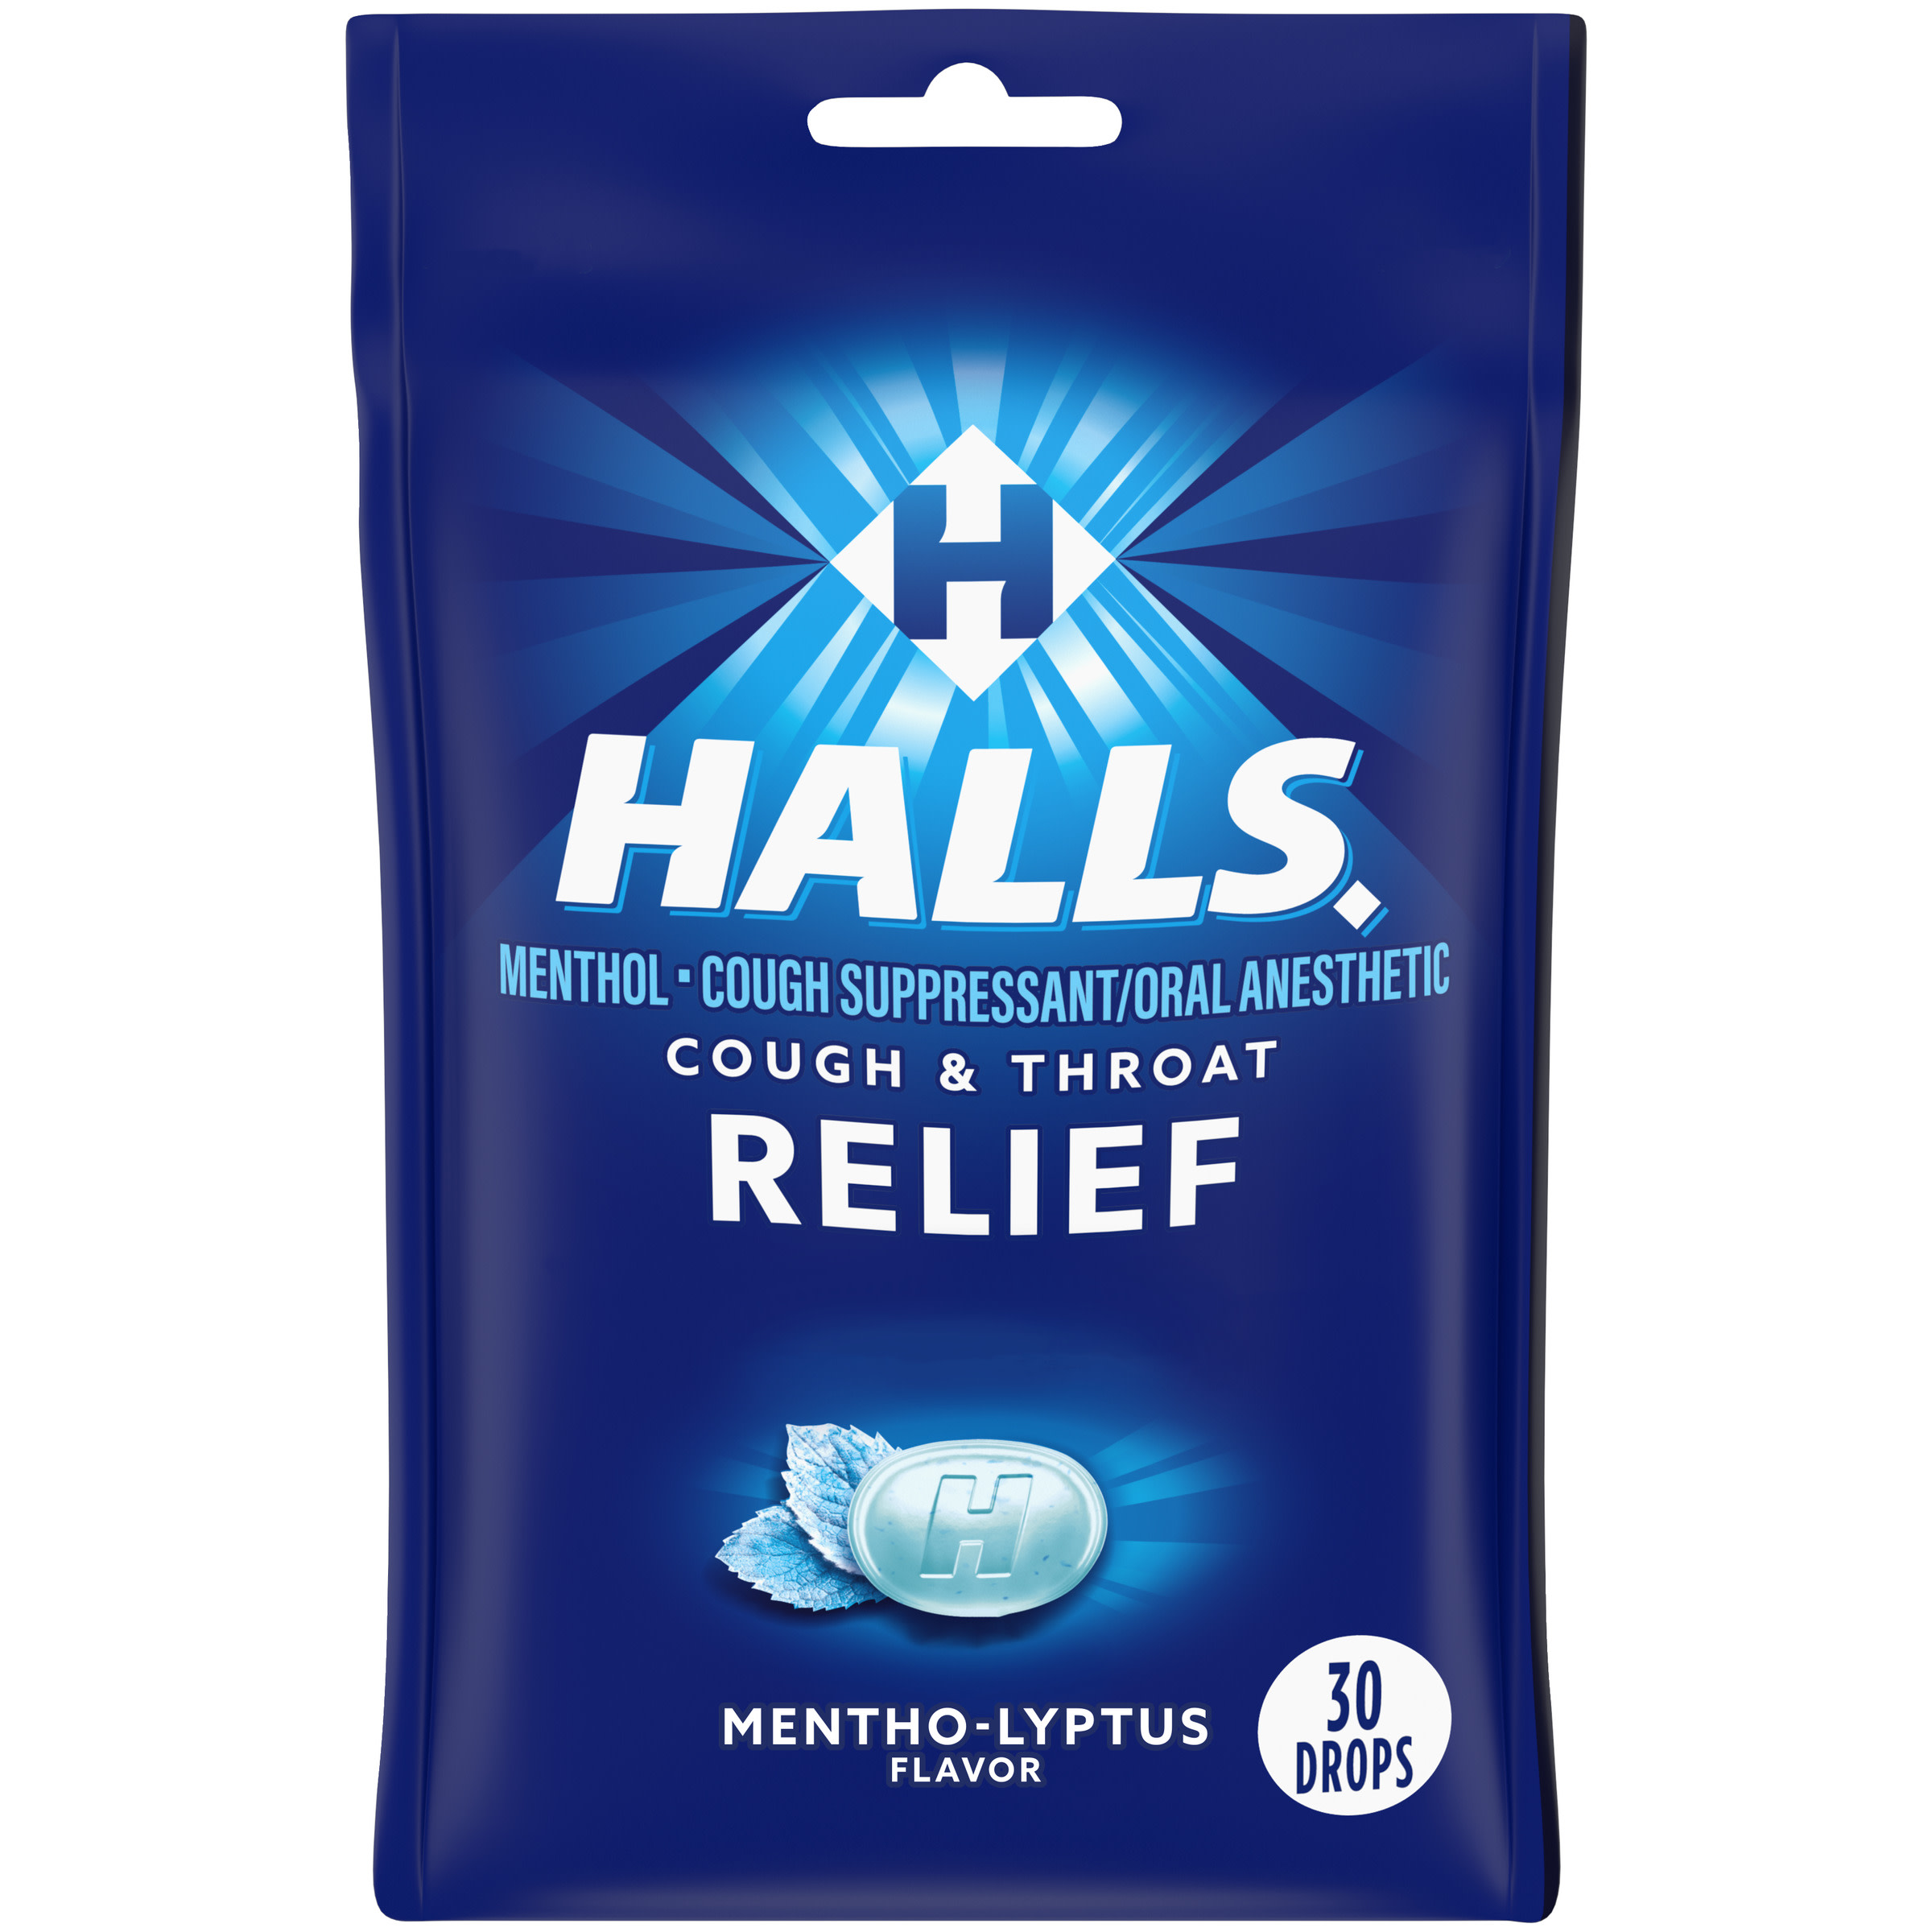 HALLS Relief Mentho-Lyptus Cough Drops, 30 Drops - image 1 of 12